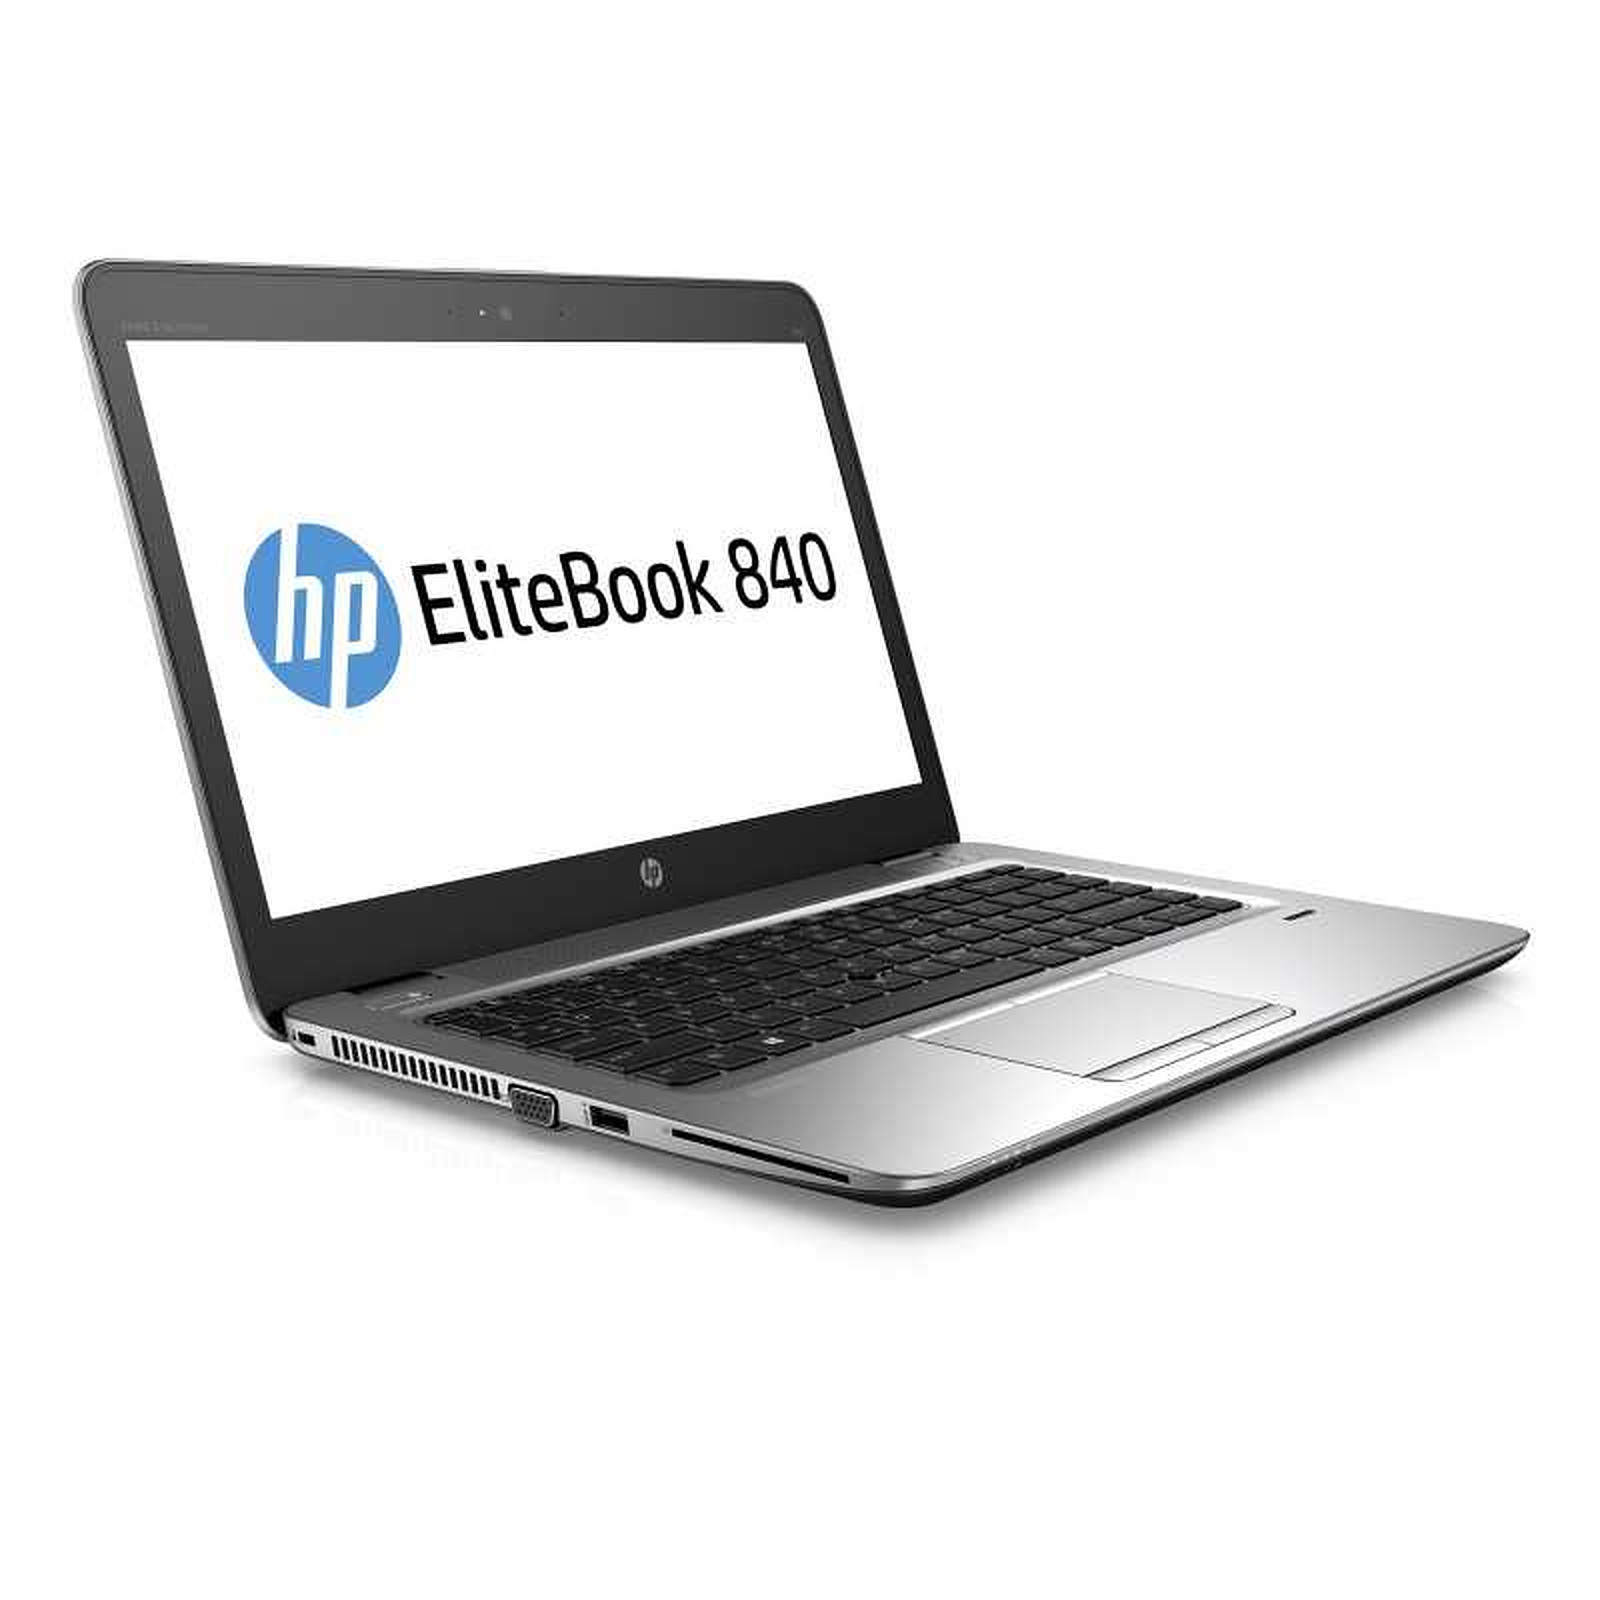 HP EliteBook 840 G3 (I5L3C65AV-2114) · Reconditionne - PC portable reconditionne HP